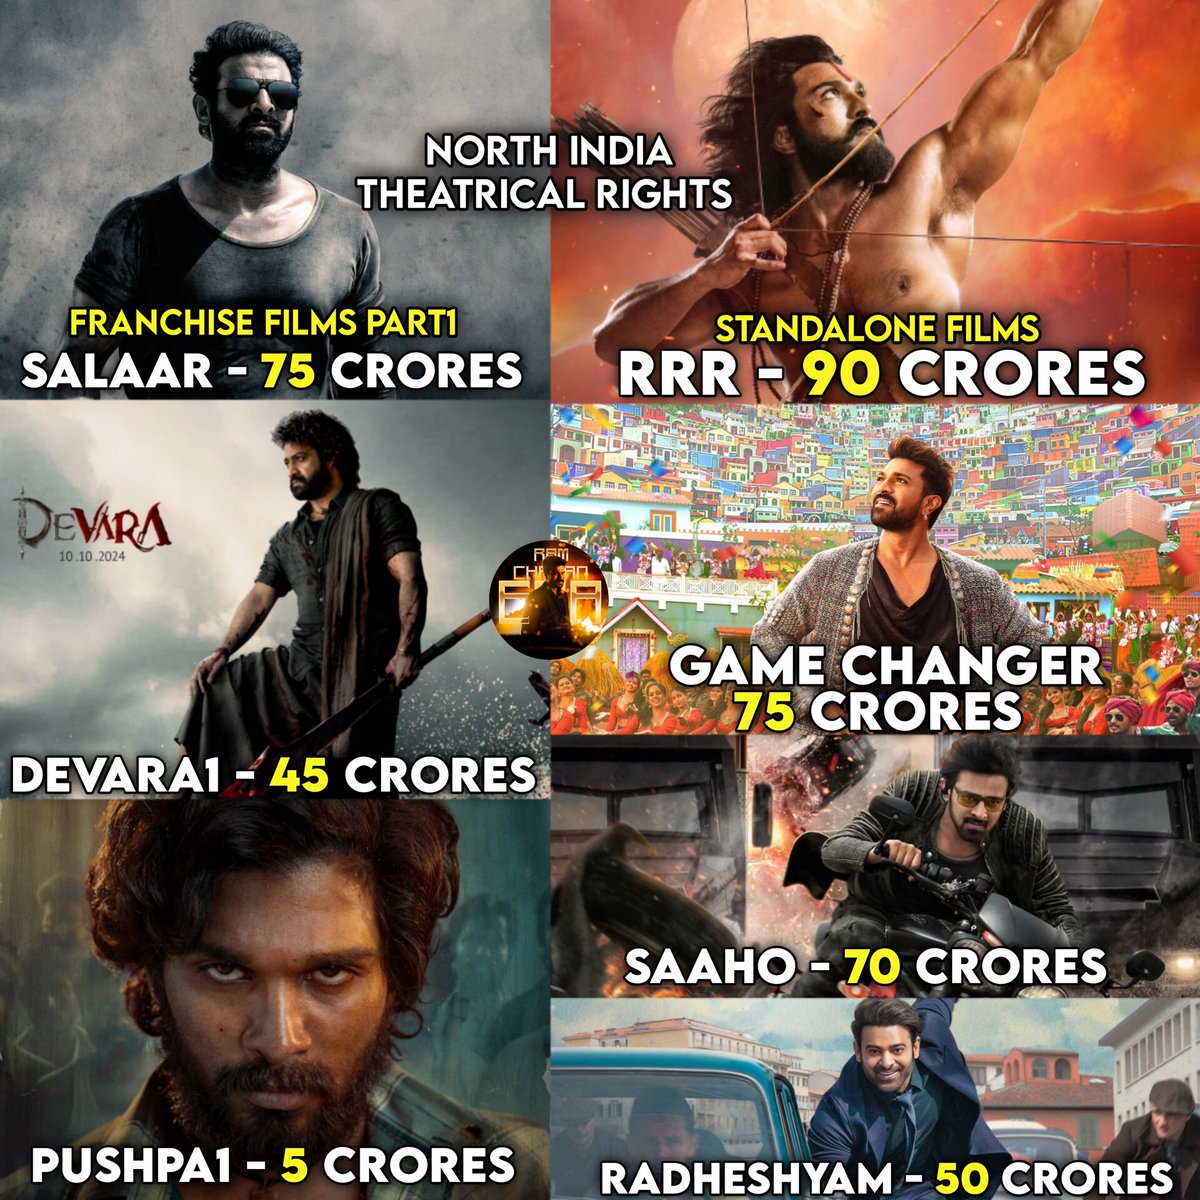 All time 2nd highest business for any standalone film 🔥 Both Top1 & Top2 belongs to one man @AlwaysRamCharan 🦁 #GameChanger #RamCharan #RRRMovie